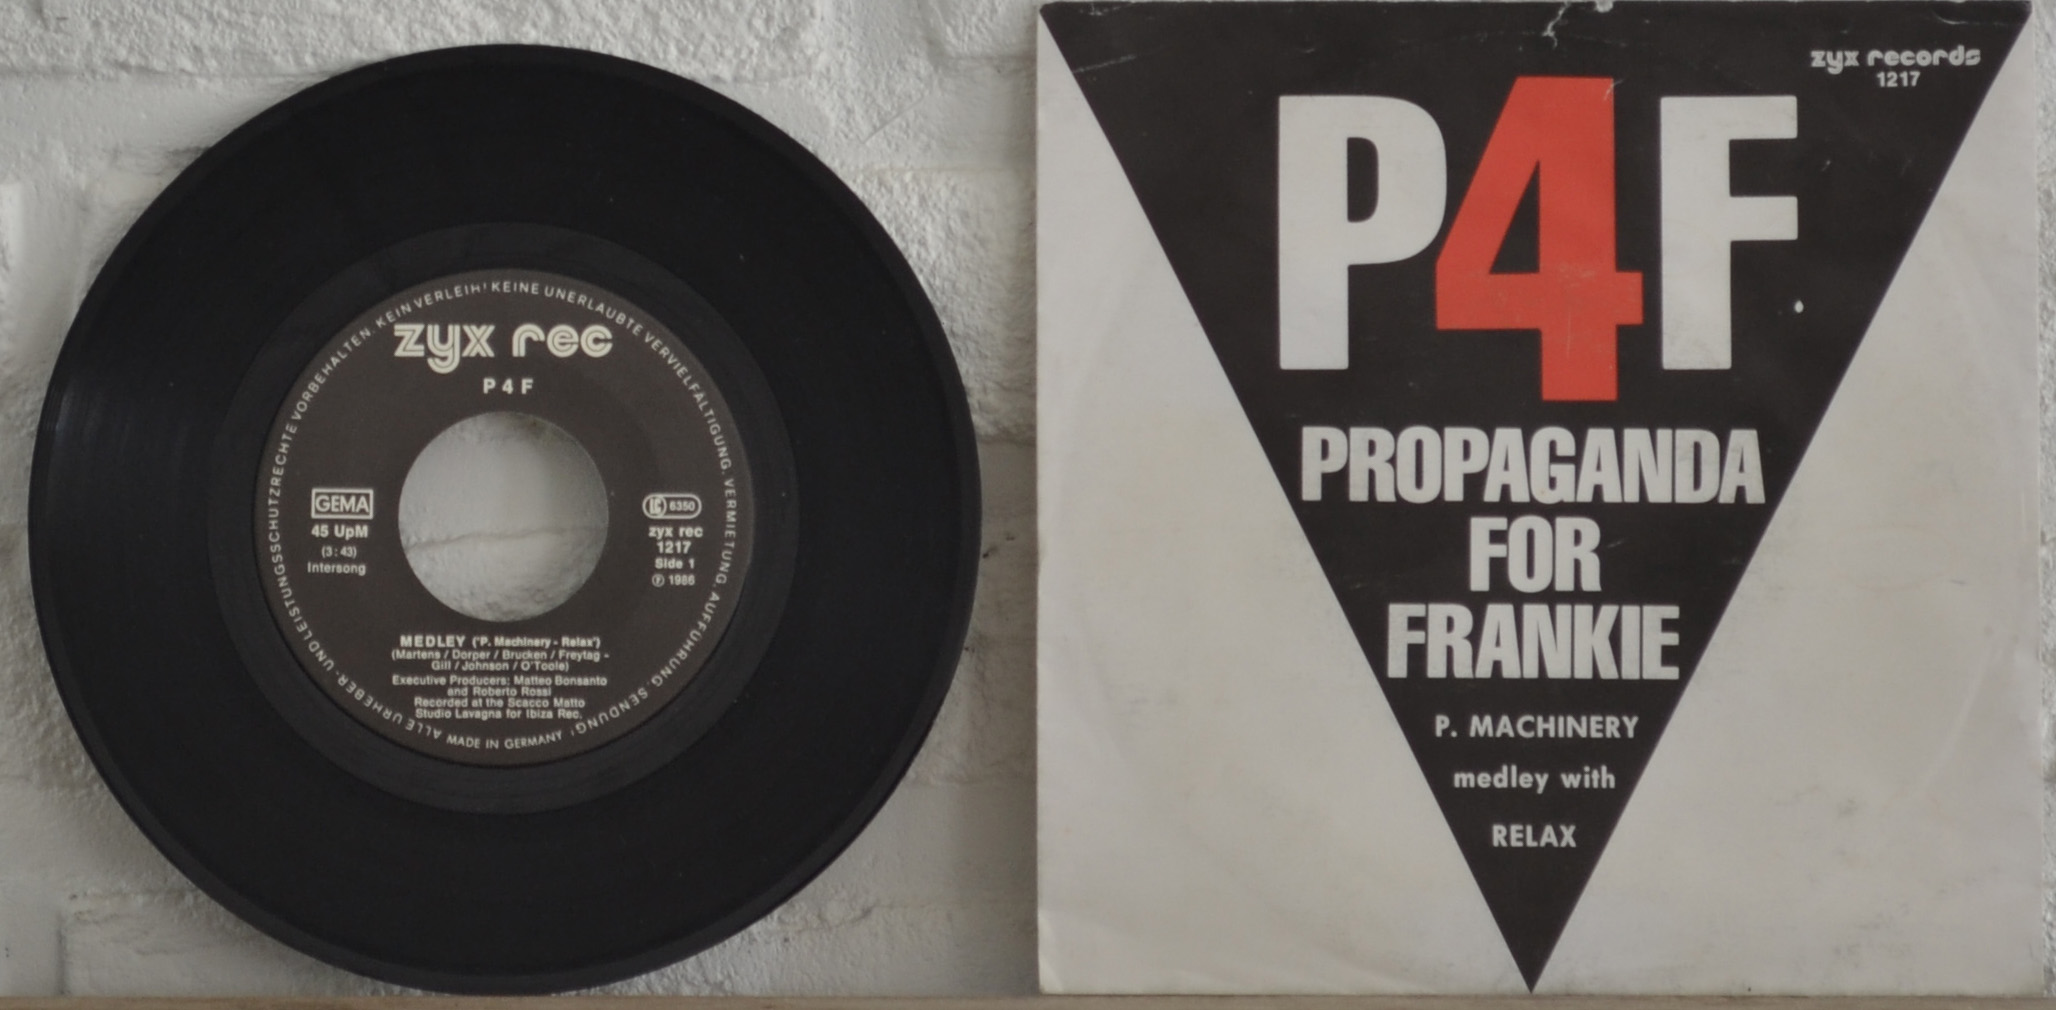 Propaganda for Frankie, Italia